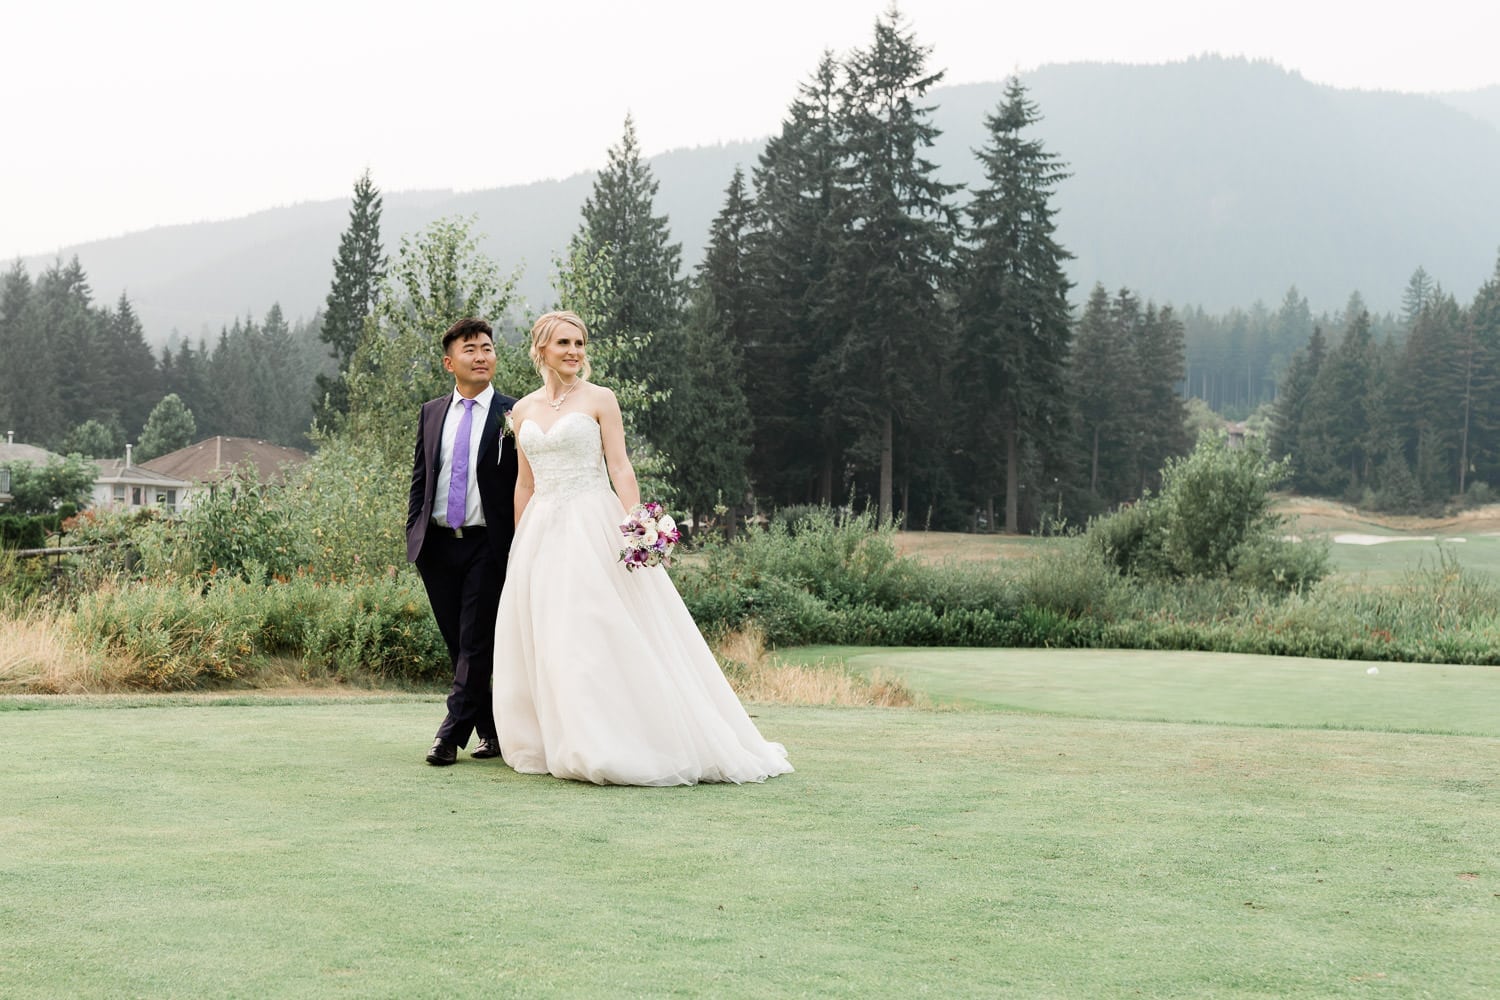 Bride and groom portrait | Vancouver wedding photographer | Westwood Plateau Golf Club Wedding